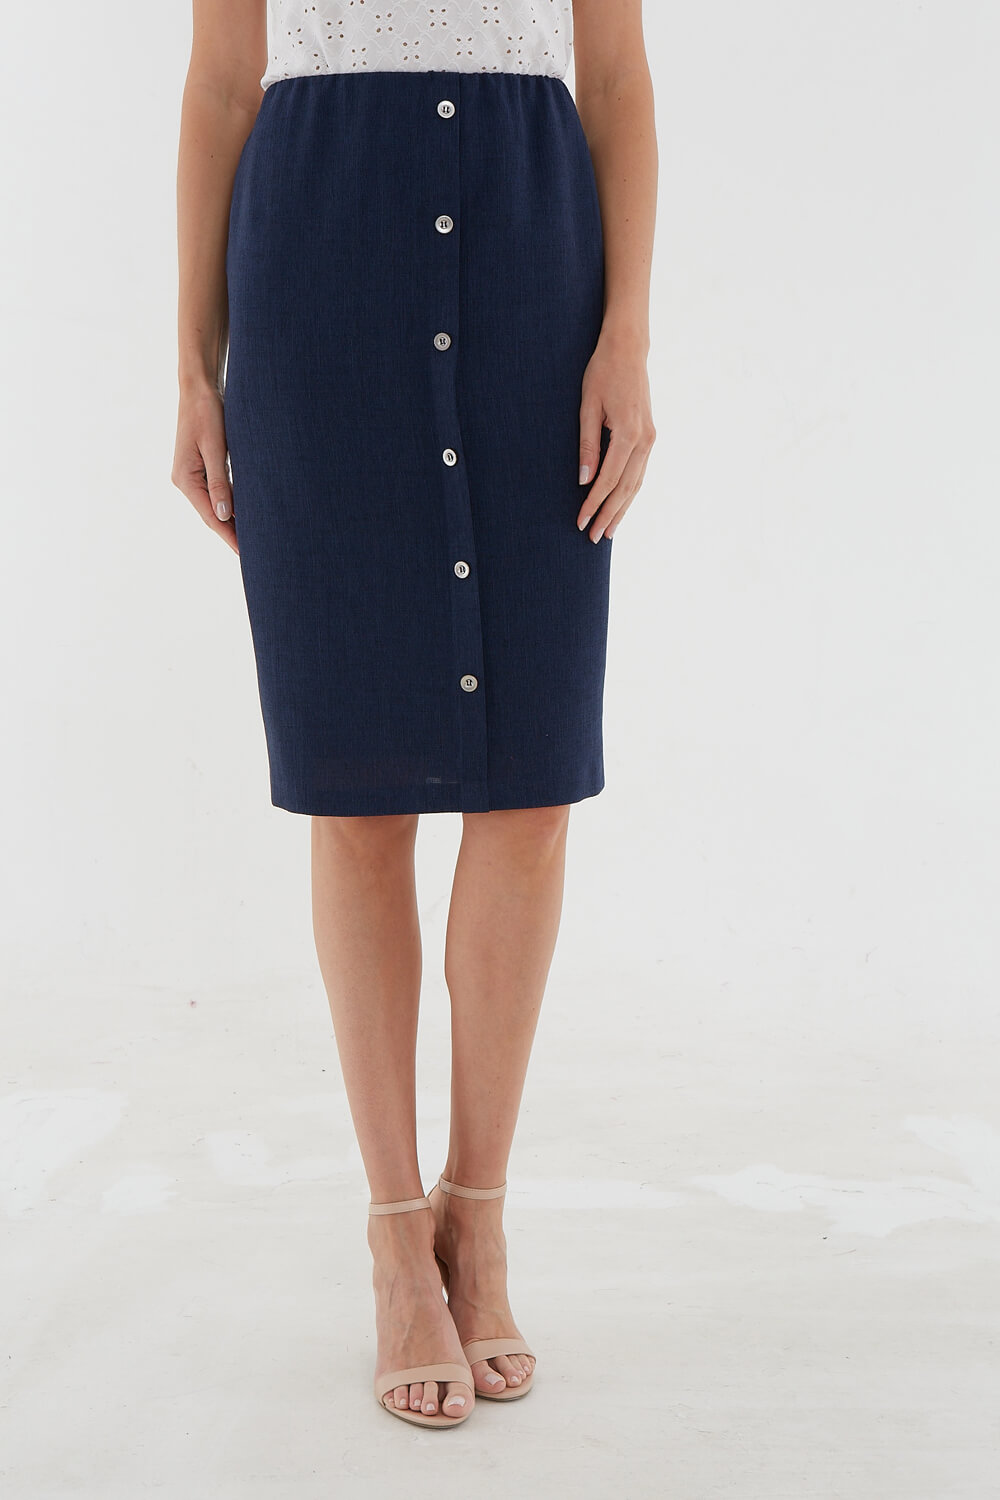 Navy  Julianna Knee Length Button Skirt, Image 2 of 3